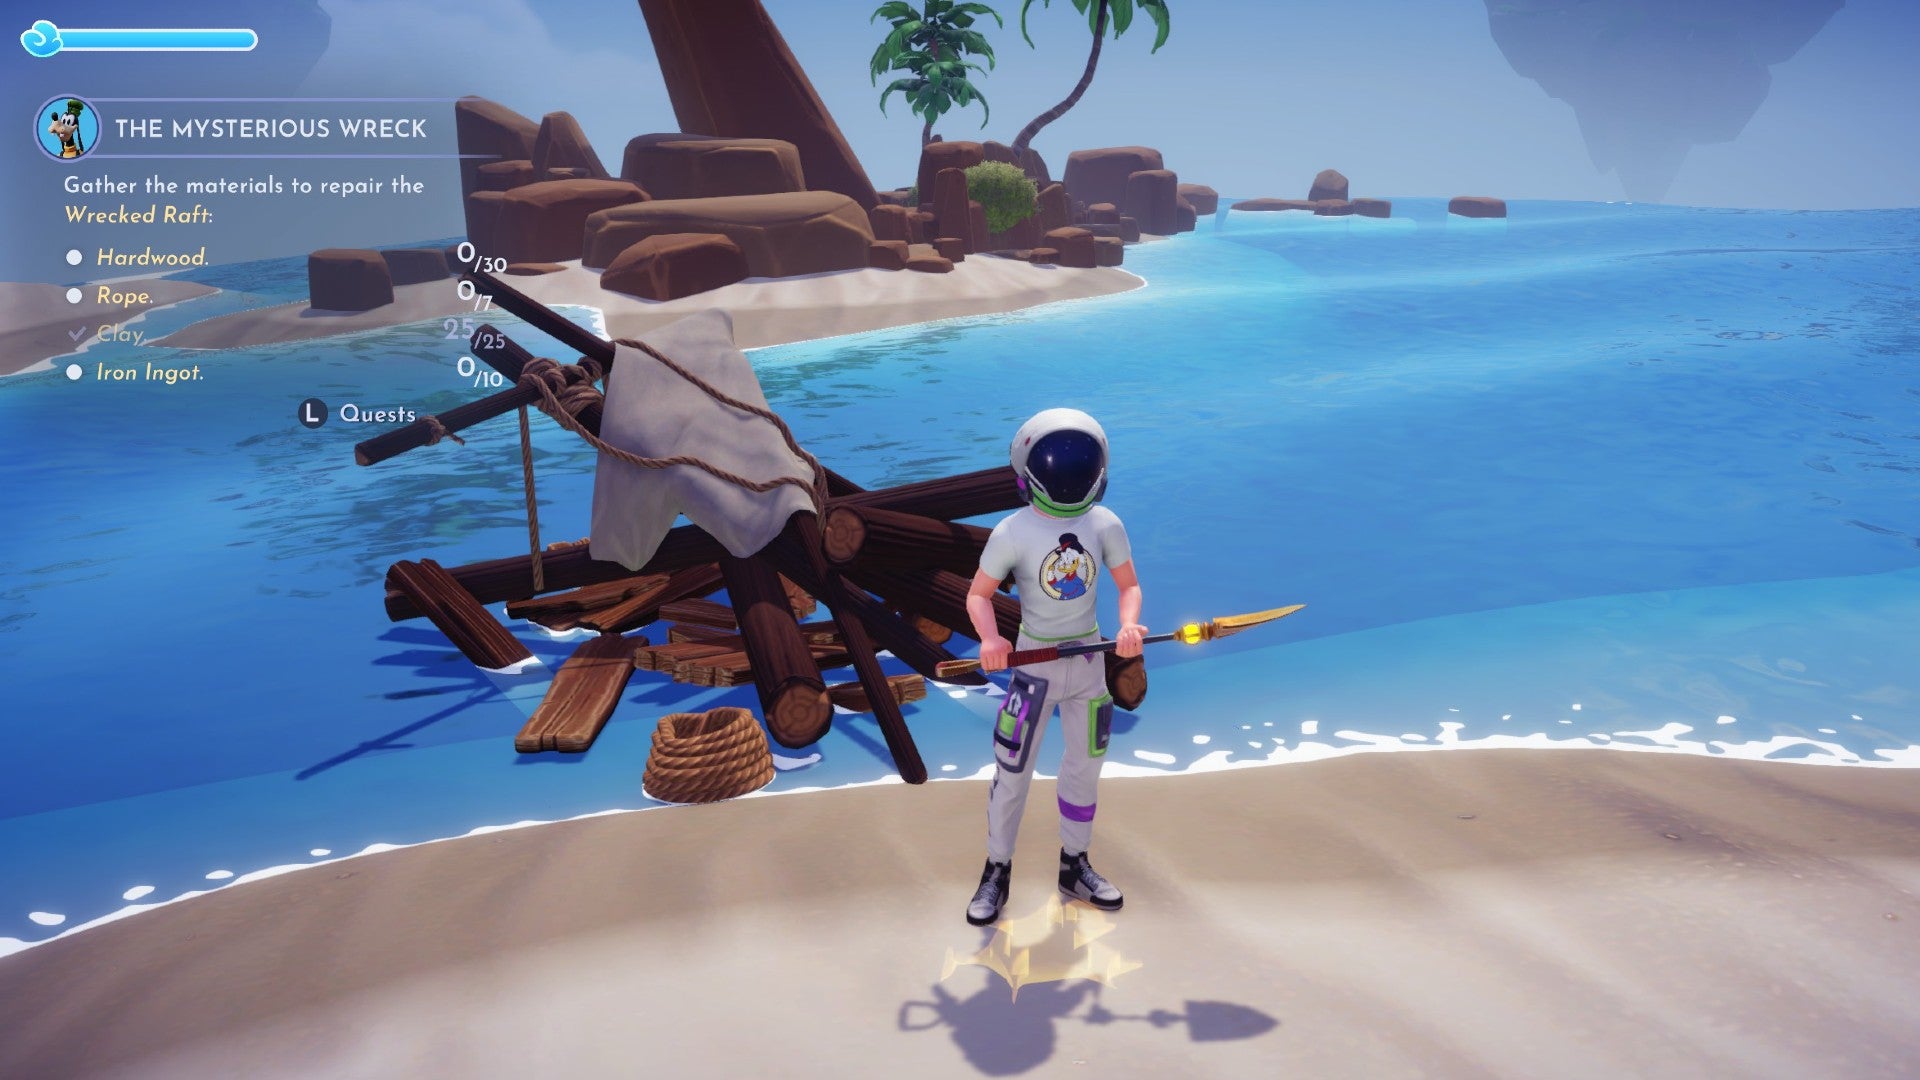 Disney Dreamlight Valley screenshot showing a person wearing a Buzz Lightyear helmet on a sandy island next to a wrecked wooden raft.